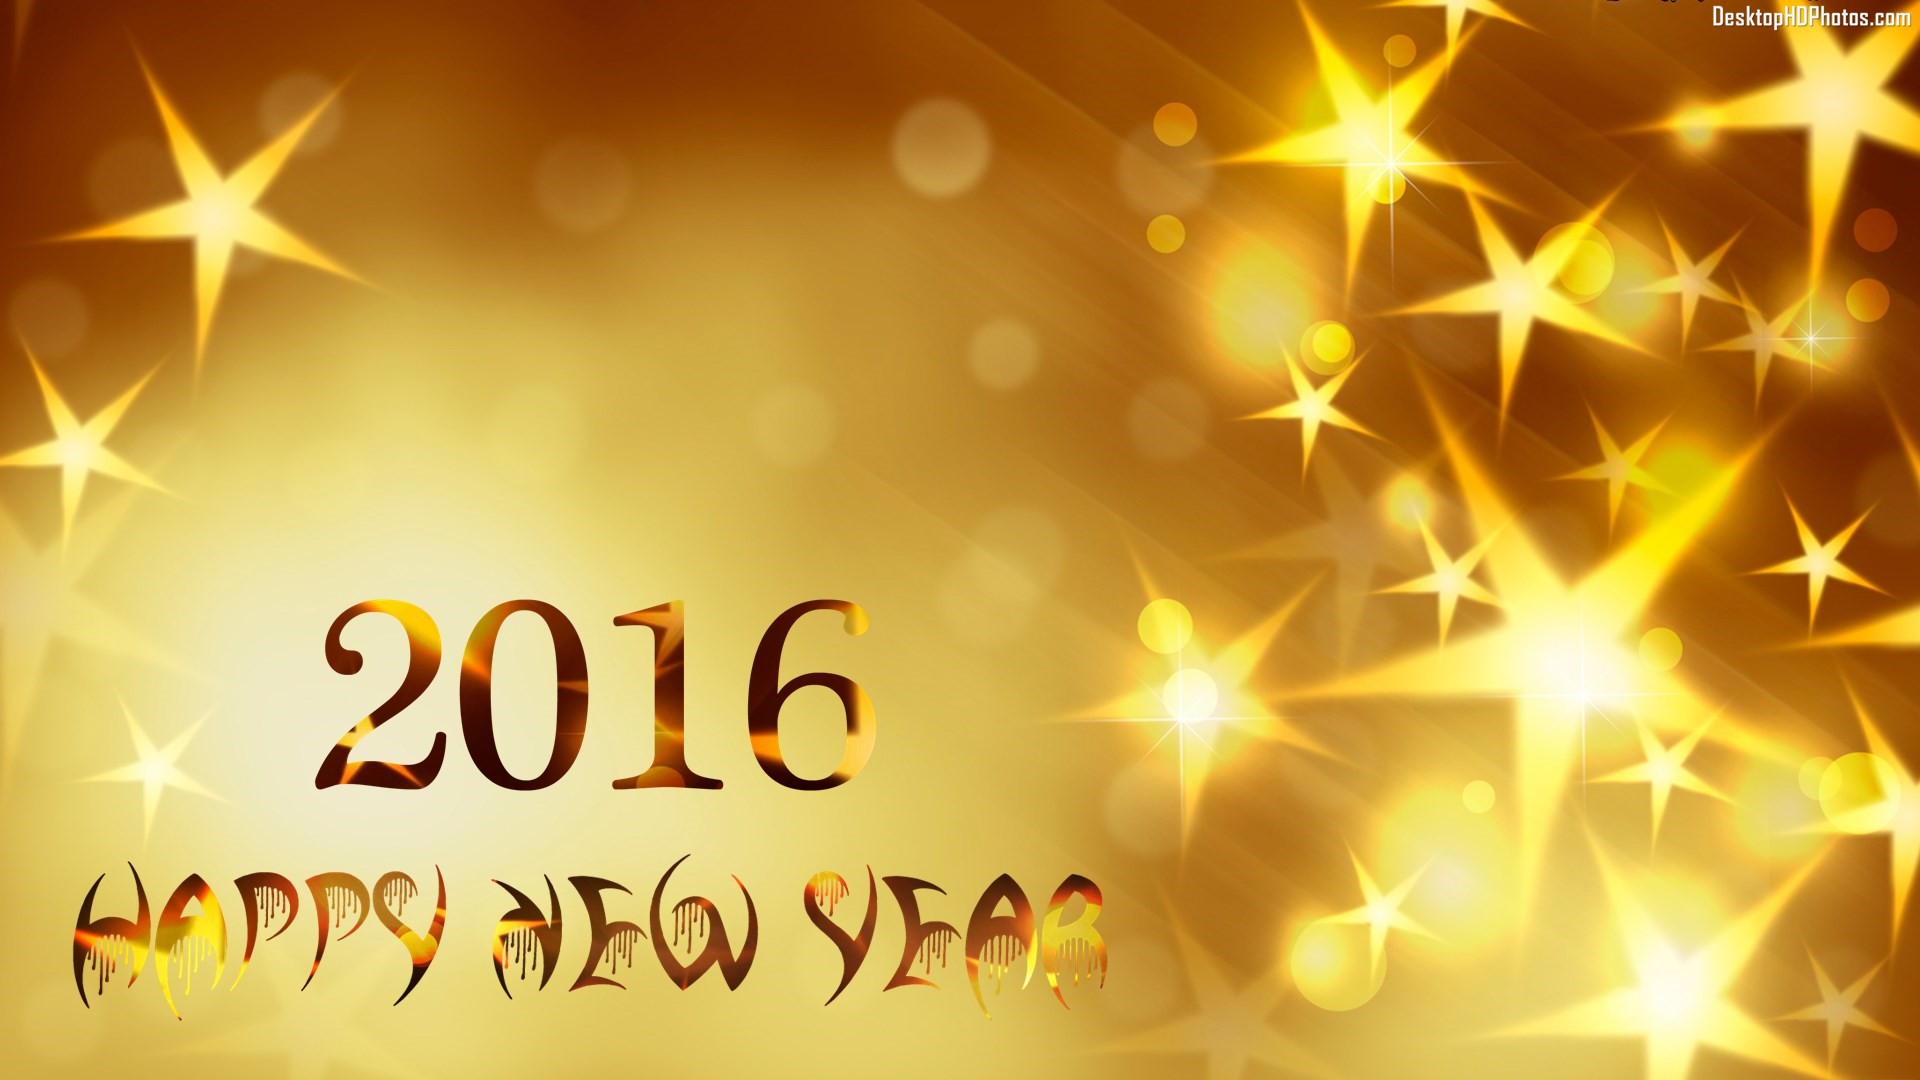 2016 new year image